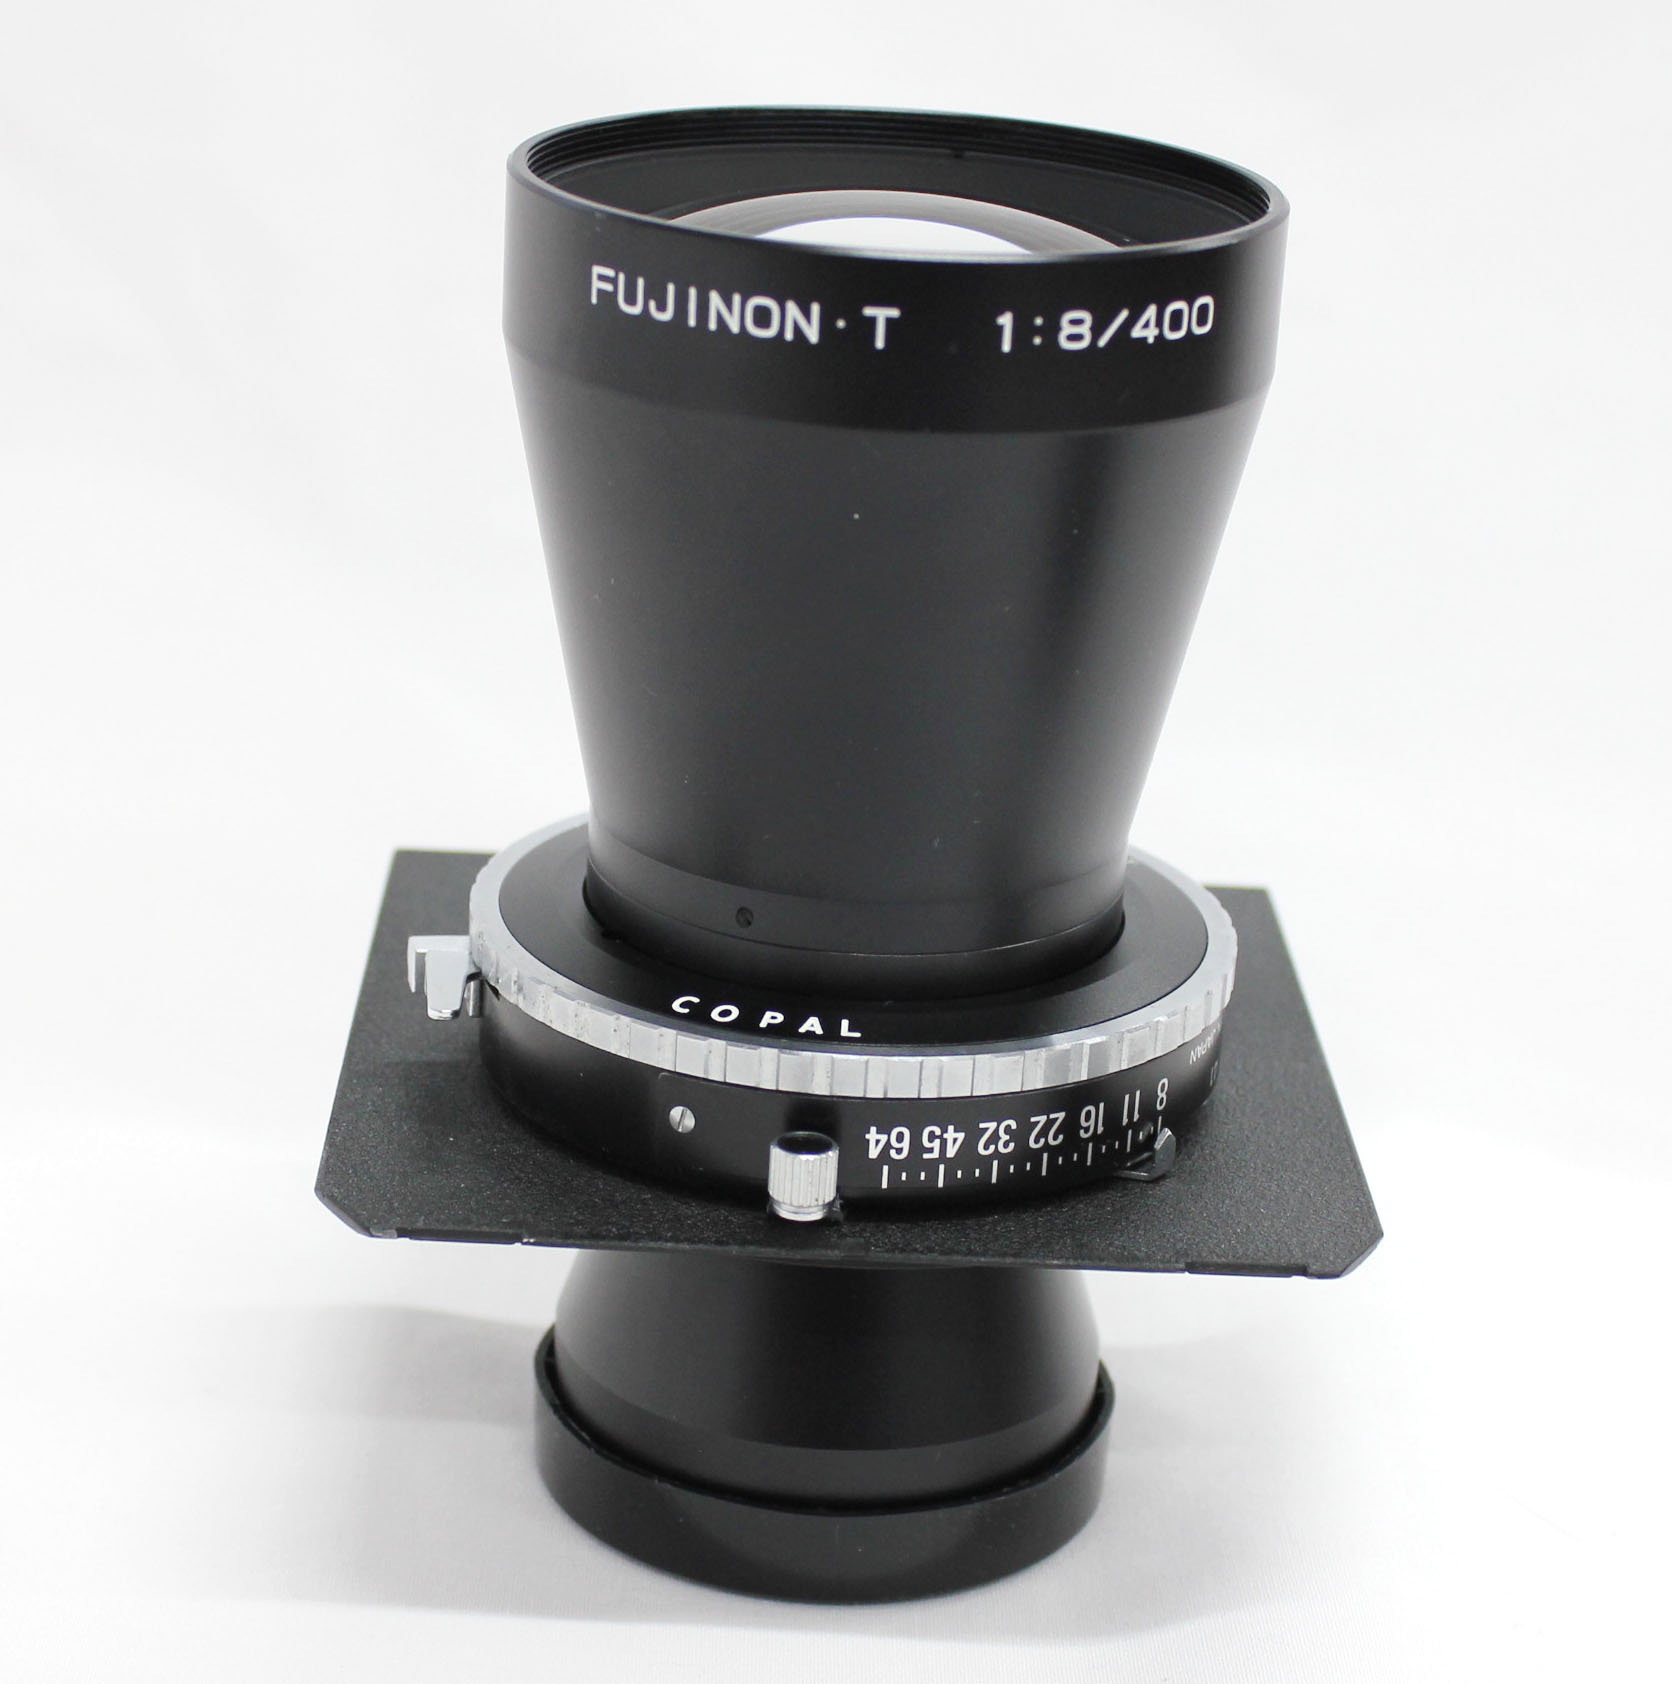  Fuji Fujinon T 400mm F/8 Large Format Lens w/ Copal Shutter from Japan Photo 3